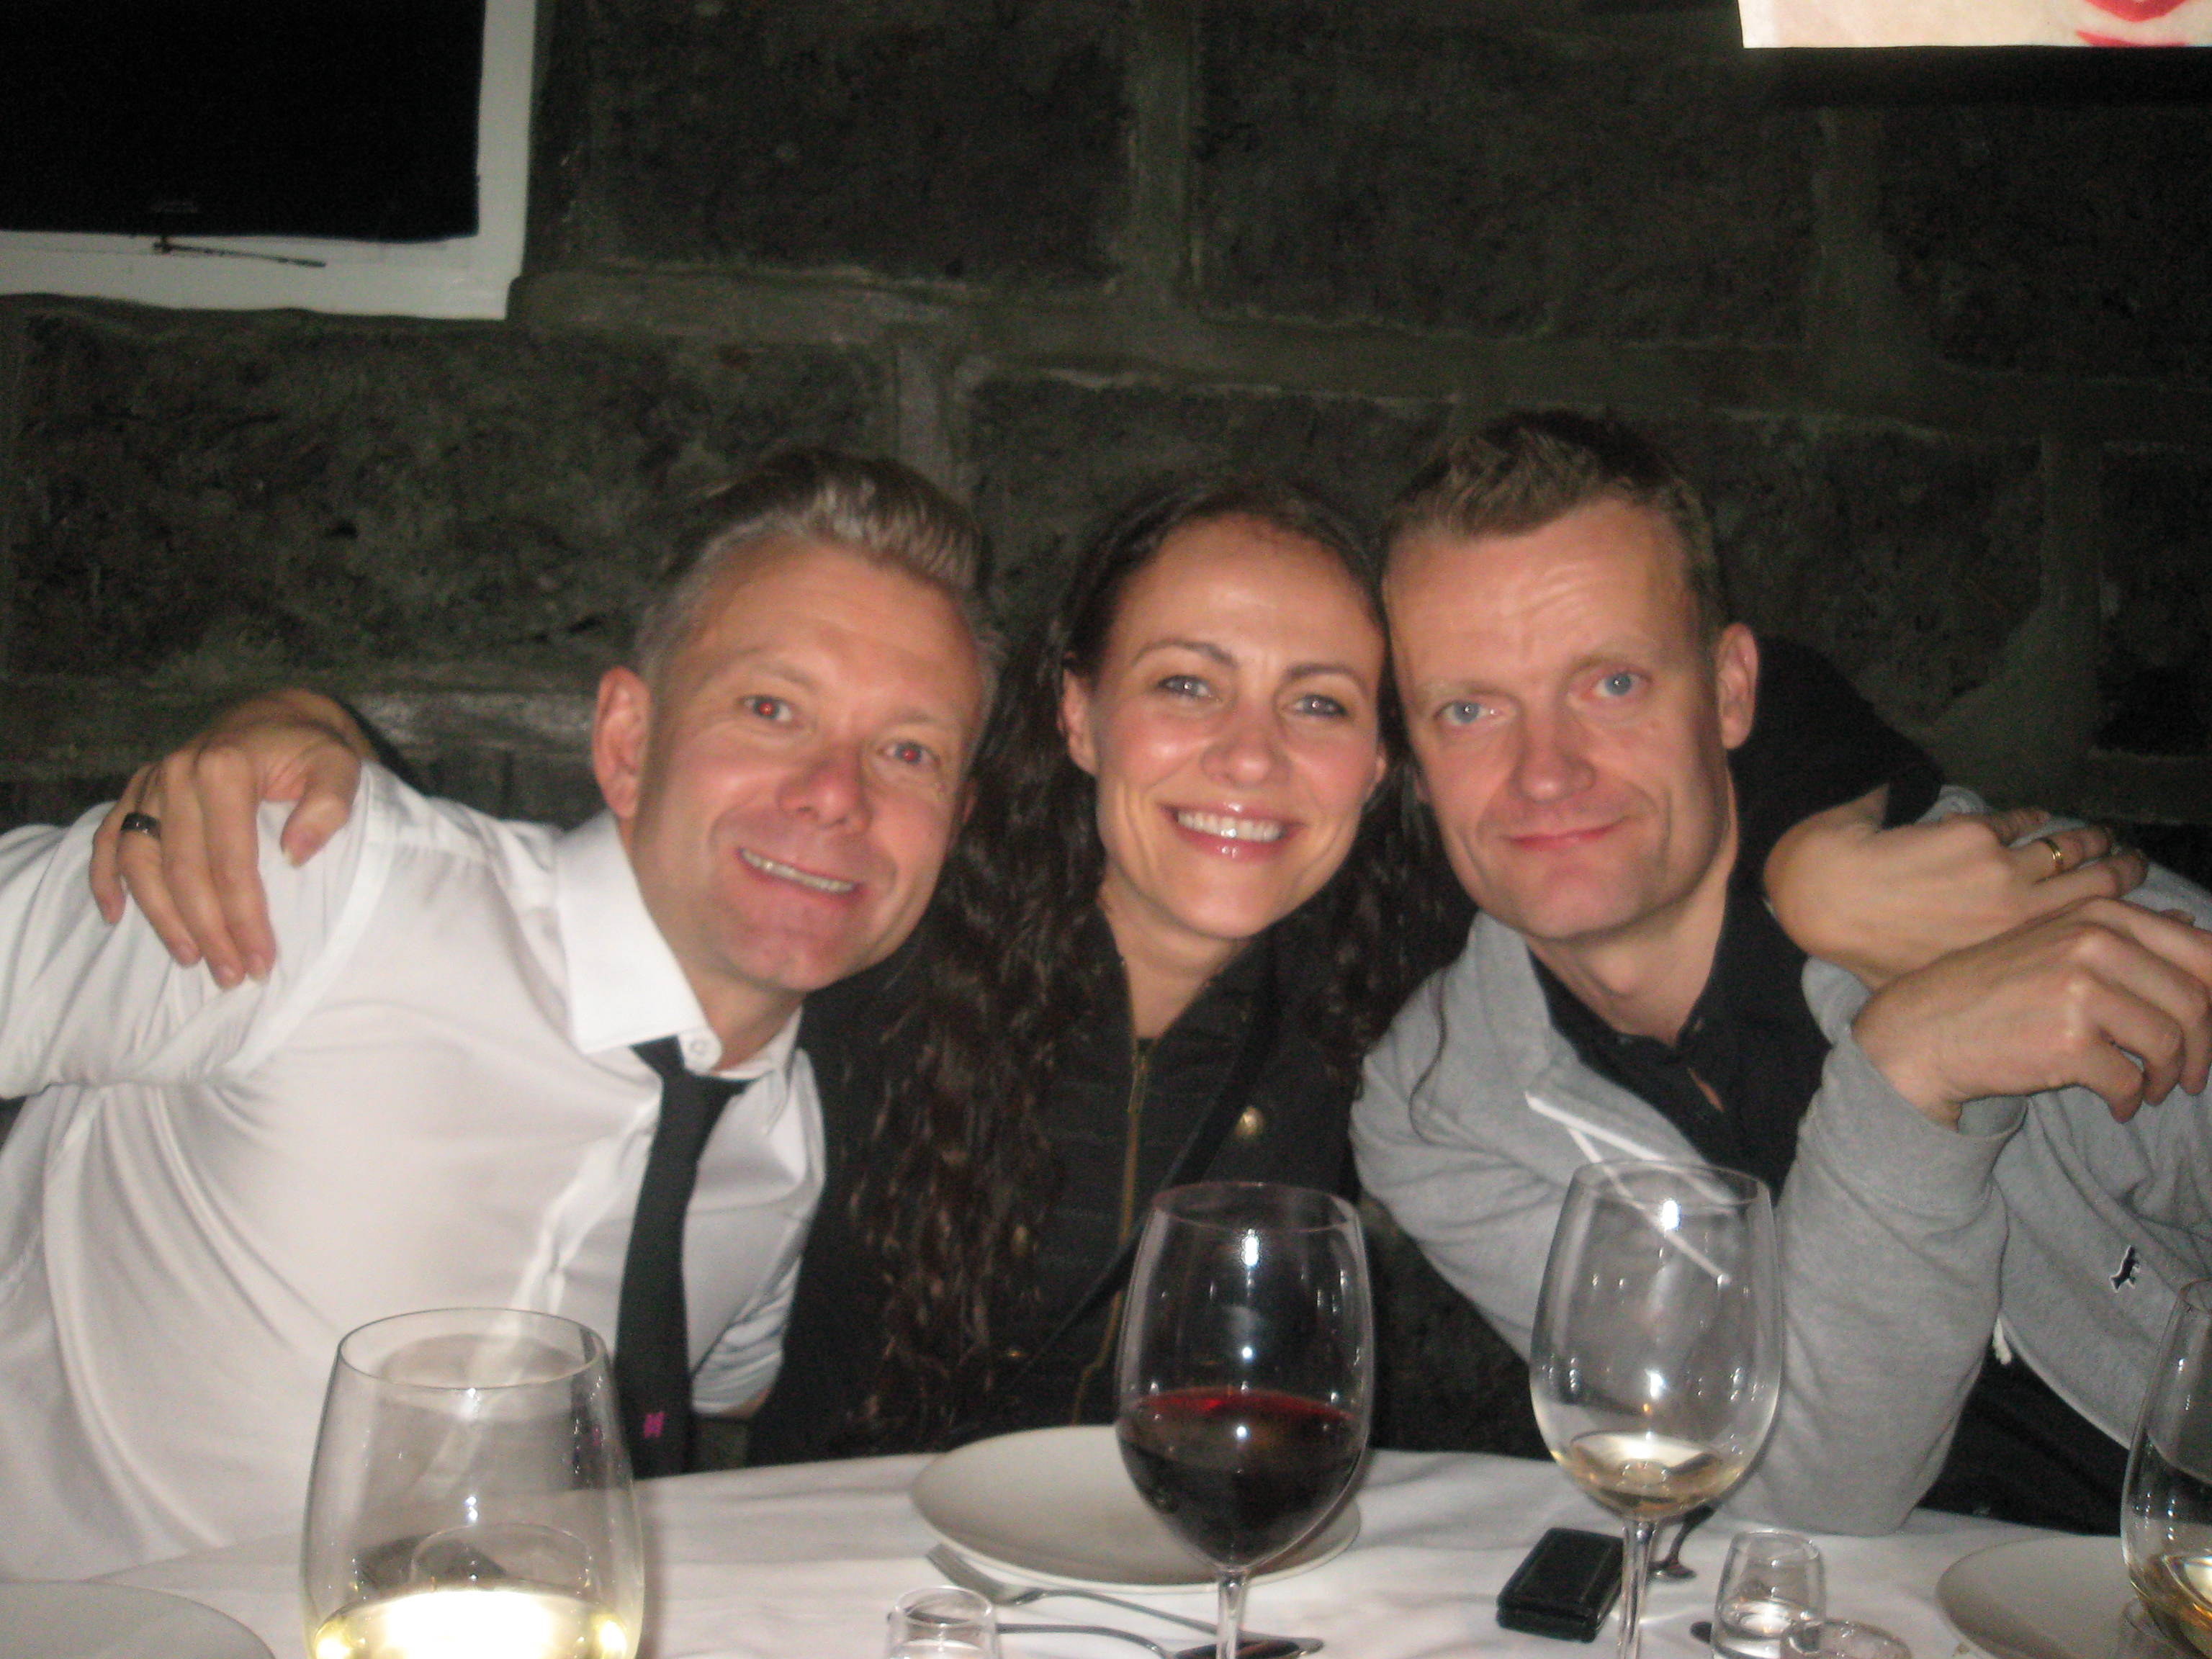 Danich actors Casper Christensen and Frank Hvam with Ingibjorg Reynsidottir.